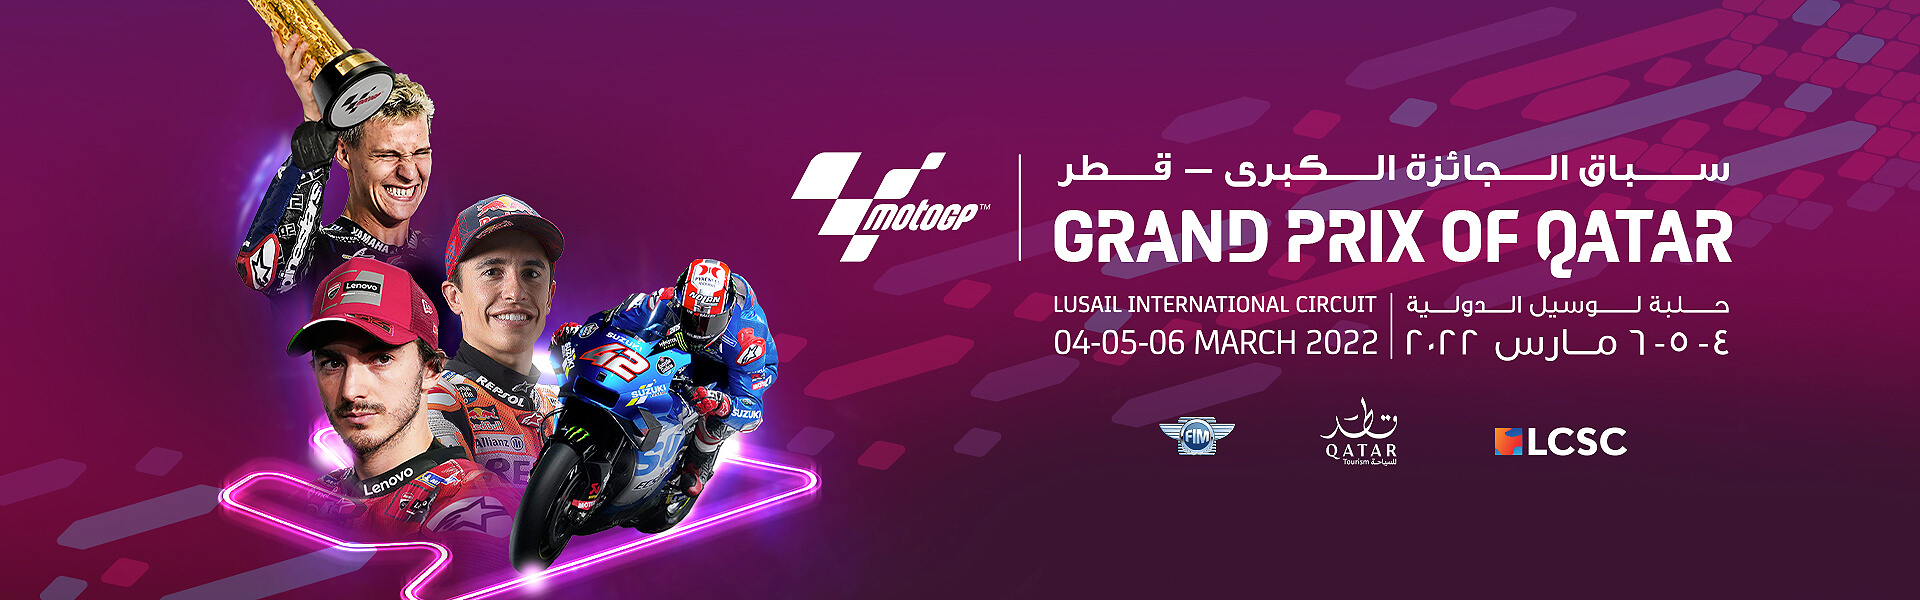 2022 MotoGP GRAND PRIX OF QATAR